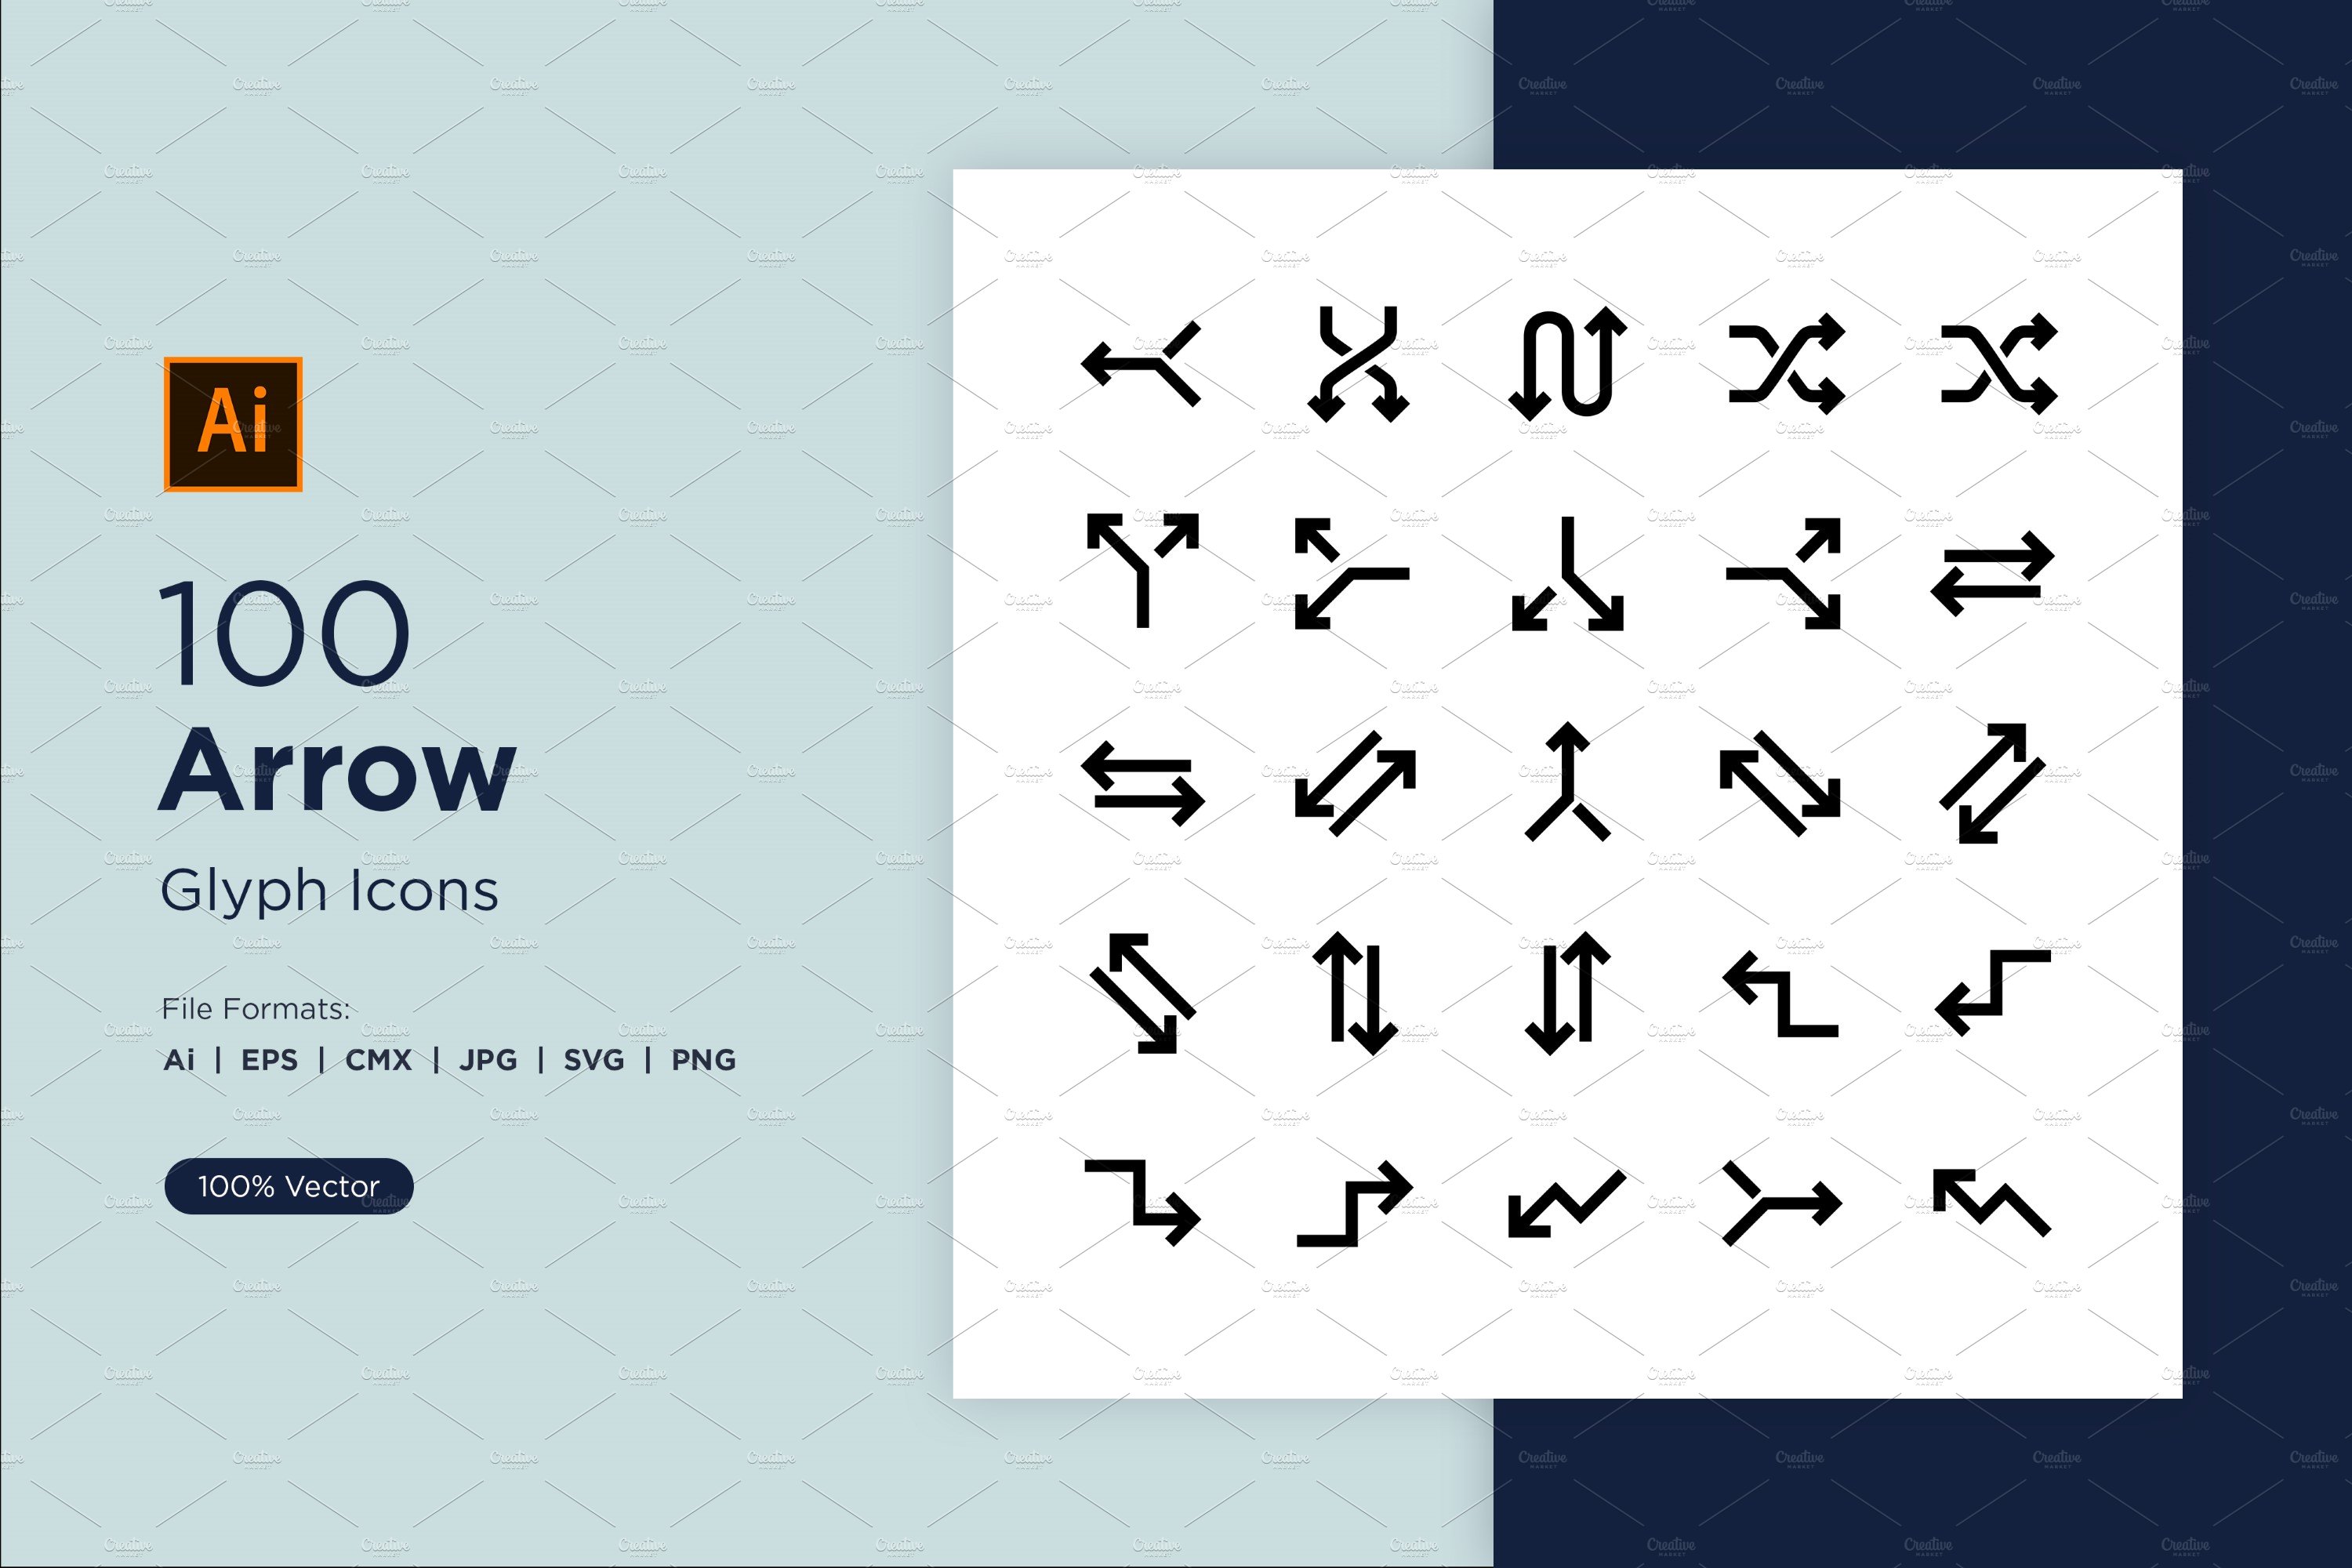 100 Arrow Glyph icon Set cover image.